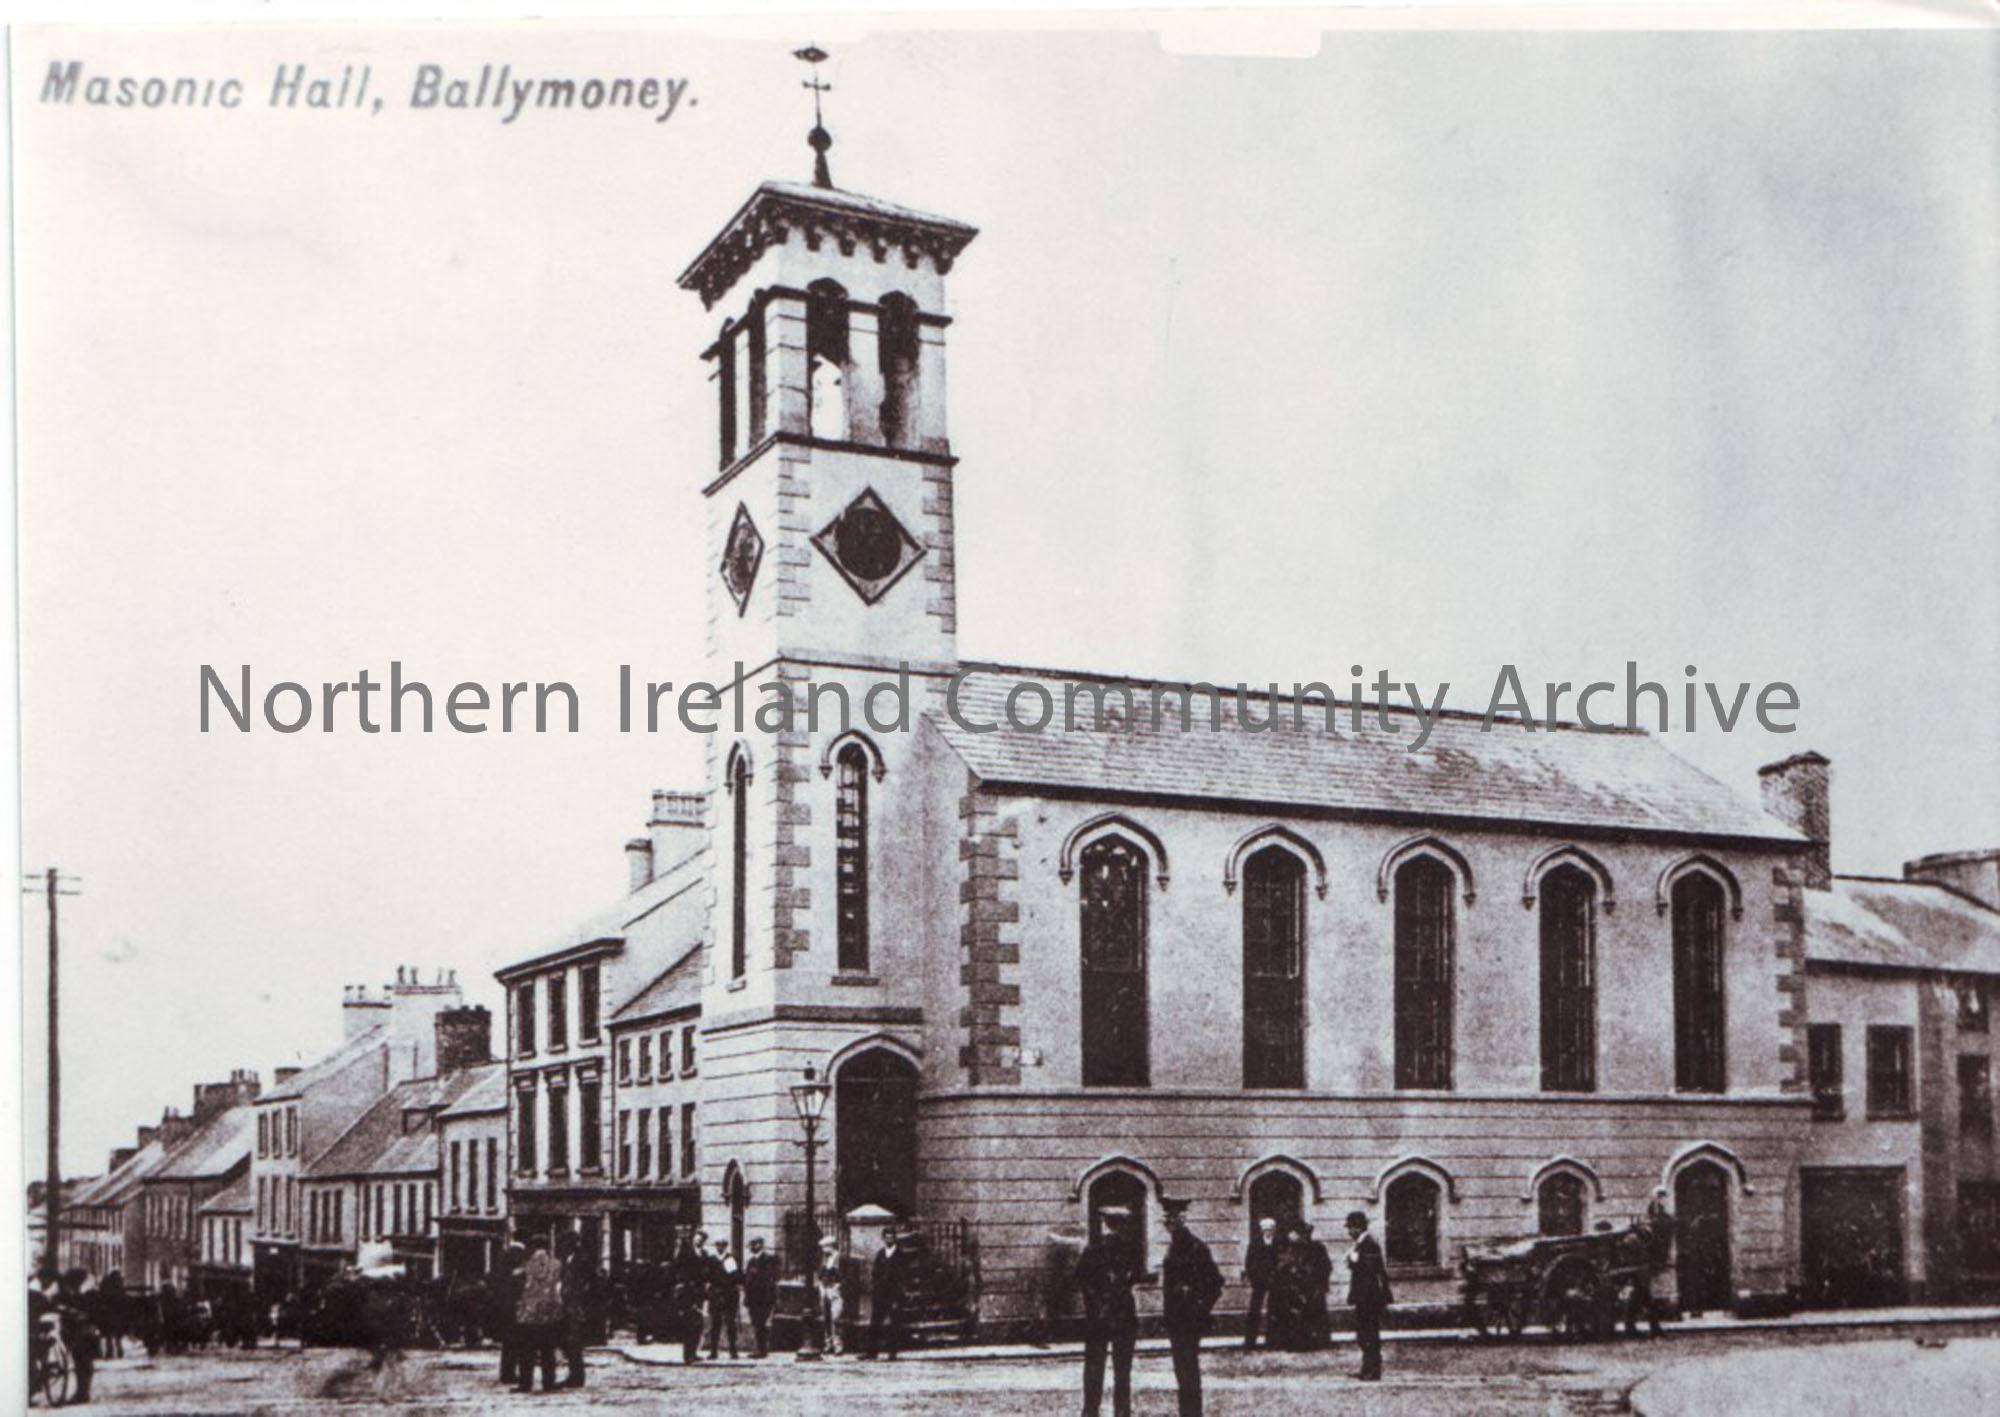 The Masonic Hall, Ballymoney